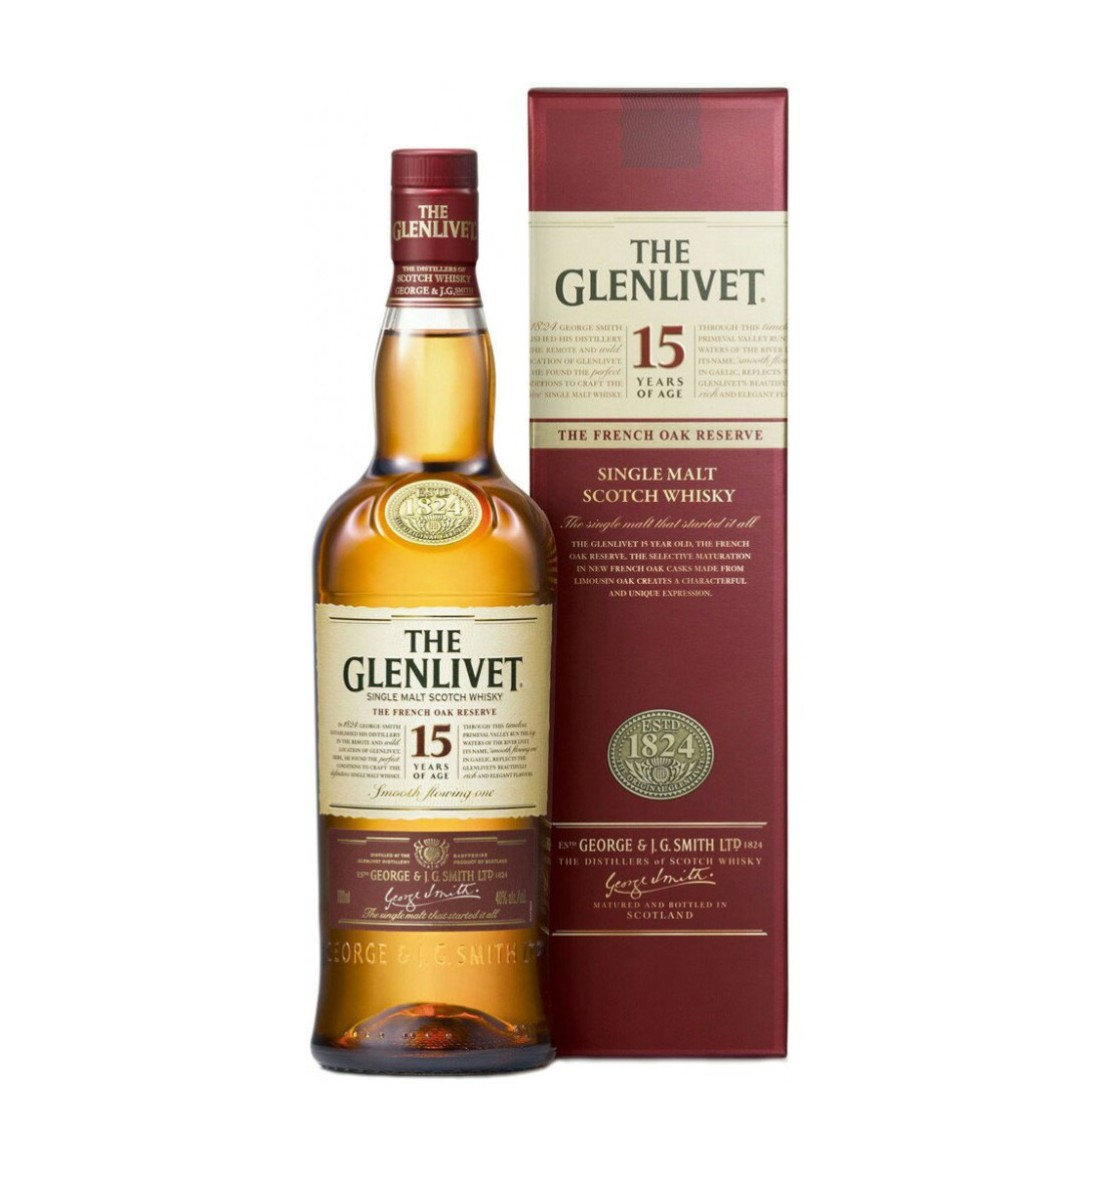 the glenlivet speyside single malt scotch whisky the french oak reserve 15 ani 07l cutie The Glenlivet 15